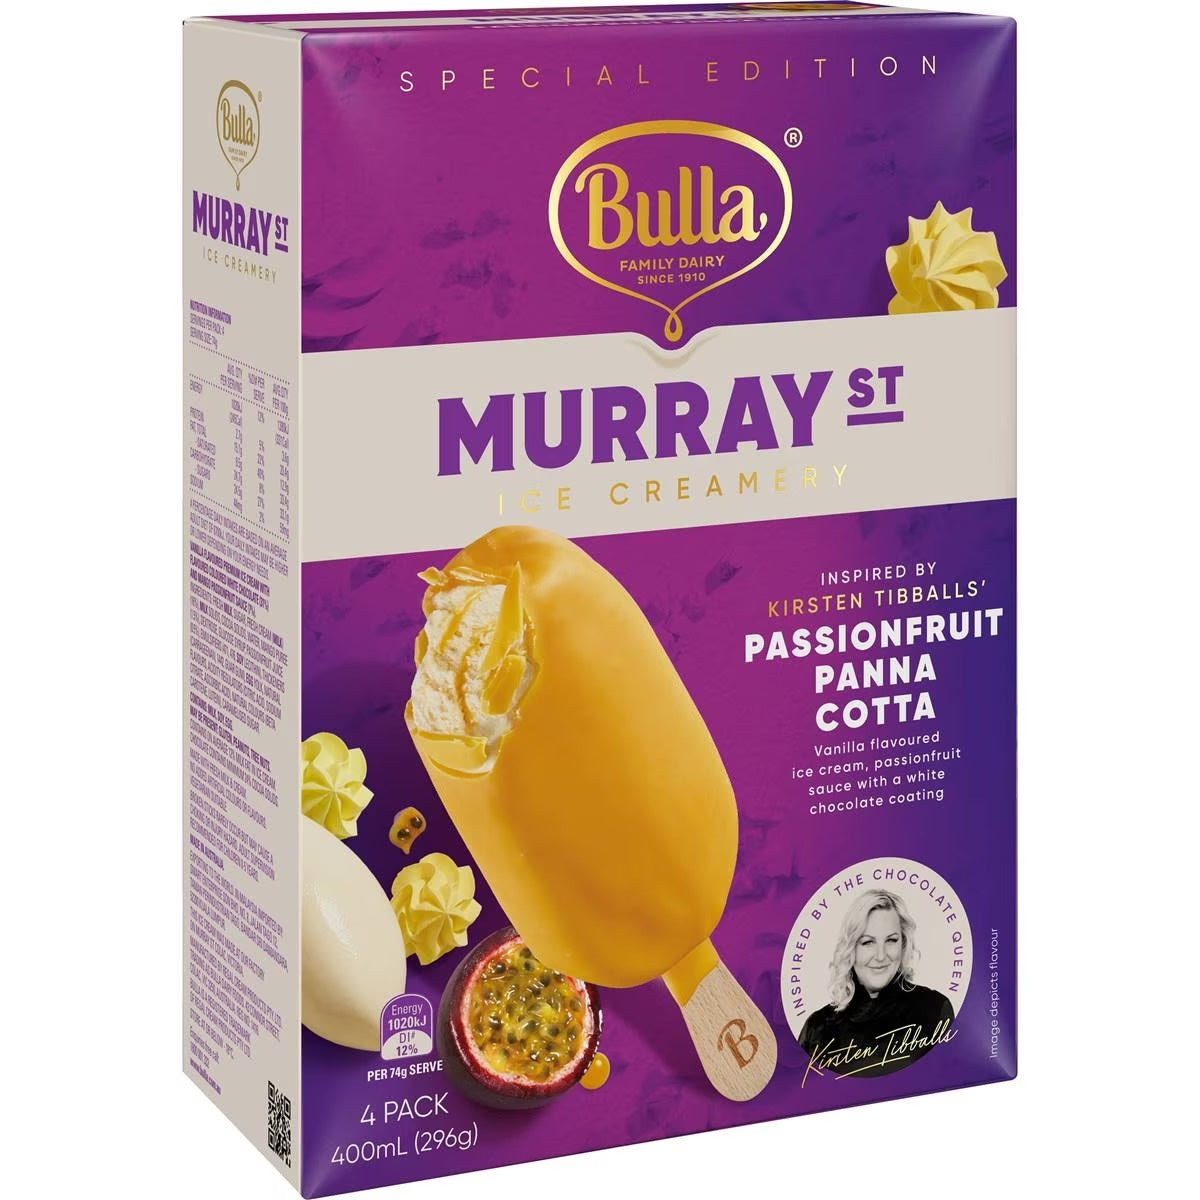 Bulla Murray Street Ice Cream Passionfruit Panna Cotta 4pk